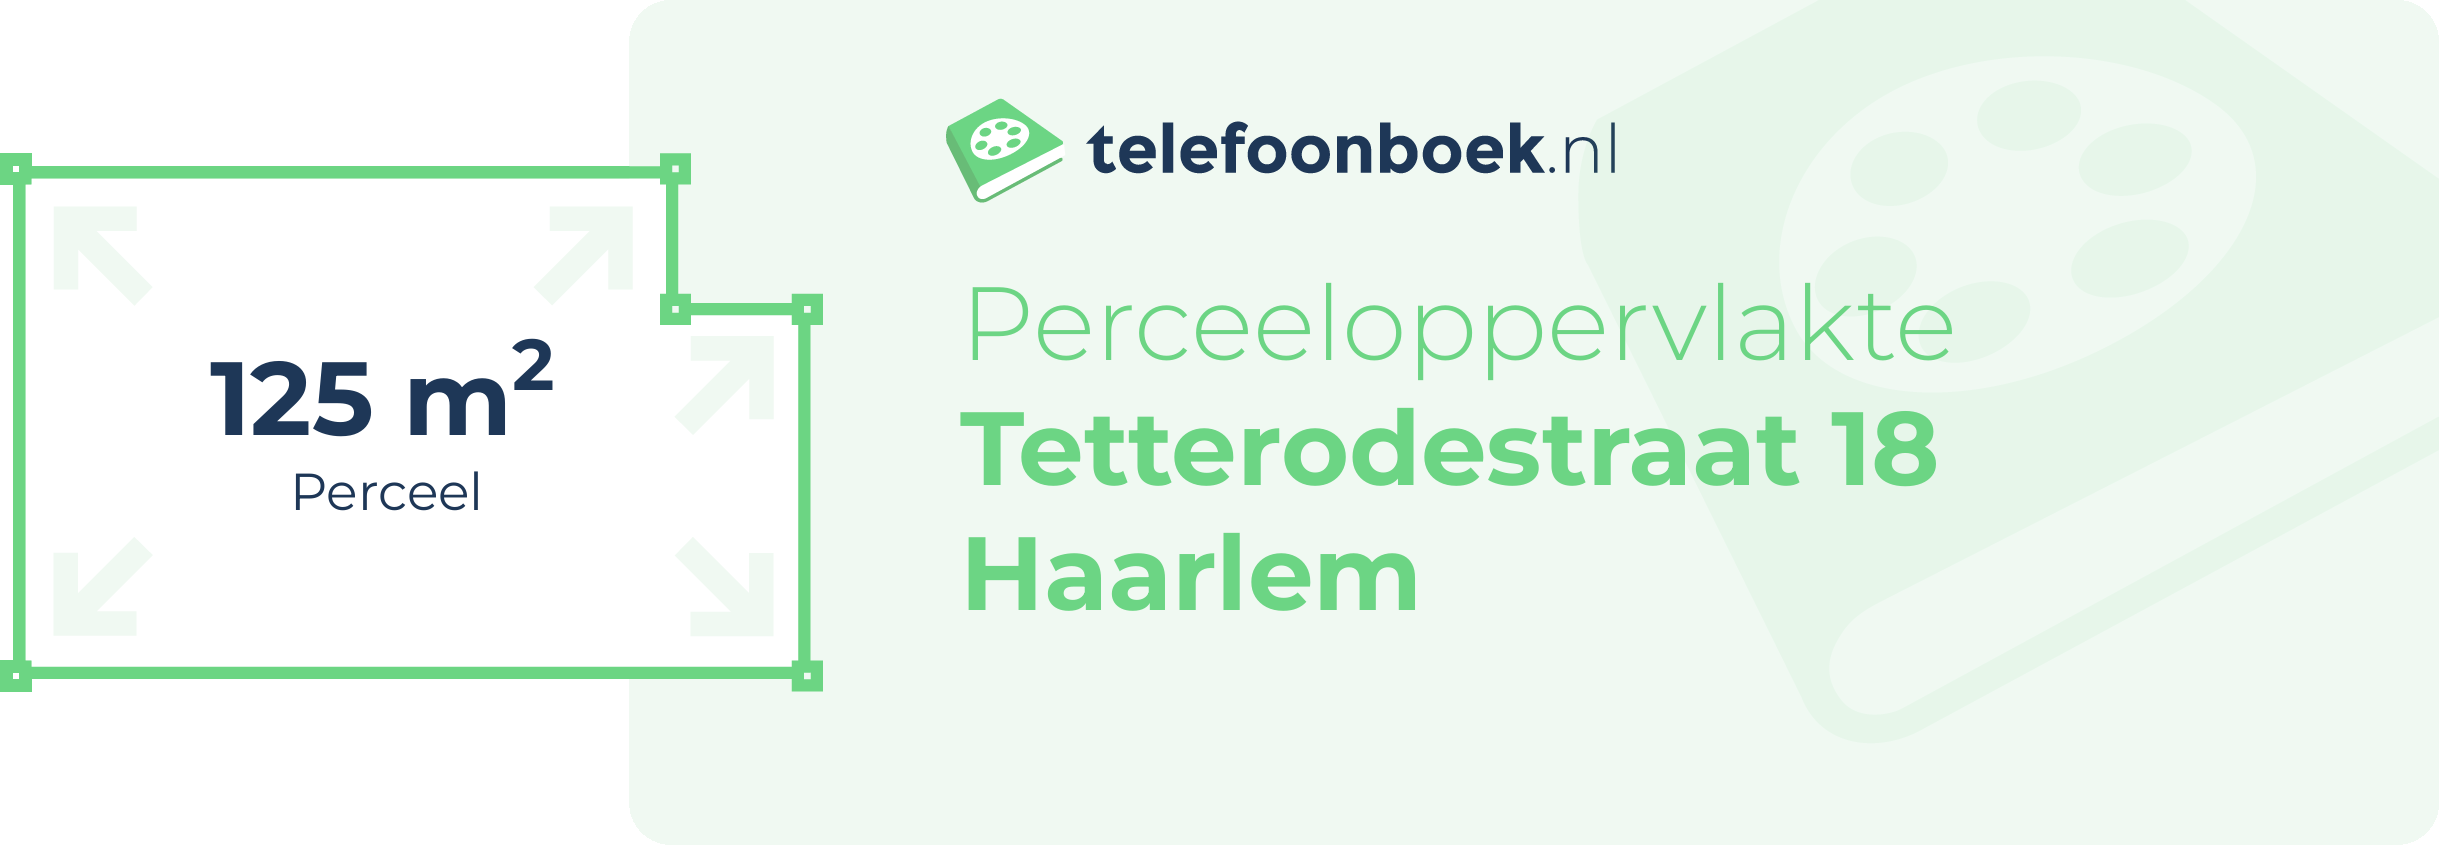 Perceeloppervlakte Tetterodestraat 18 Haarlem